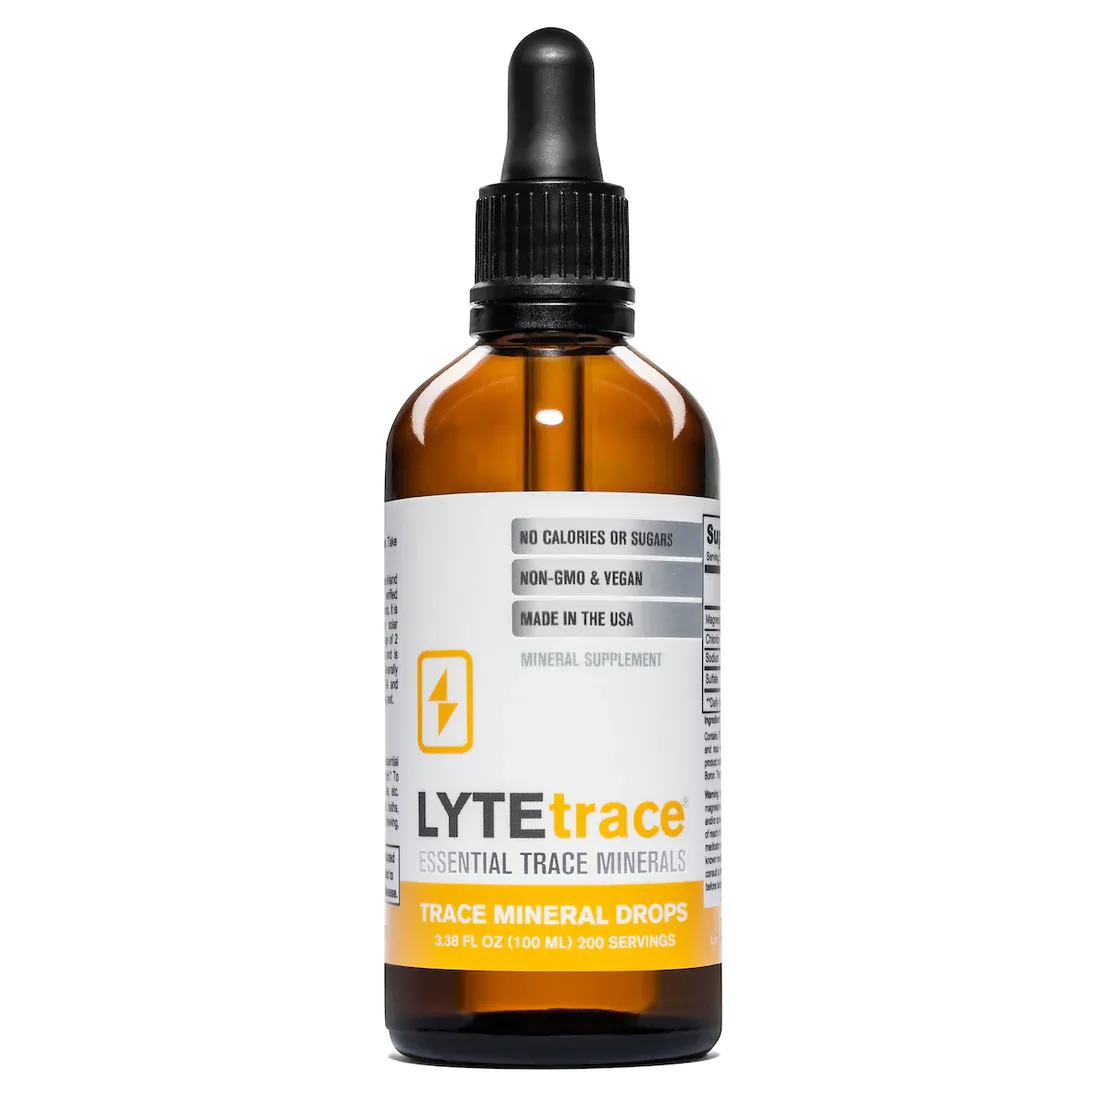 a bottle of lyfetrace on a white background